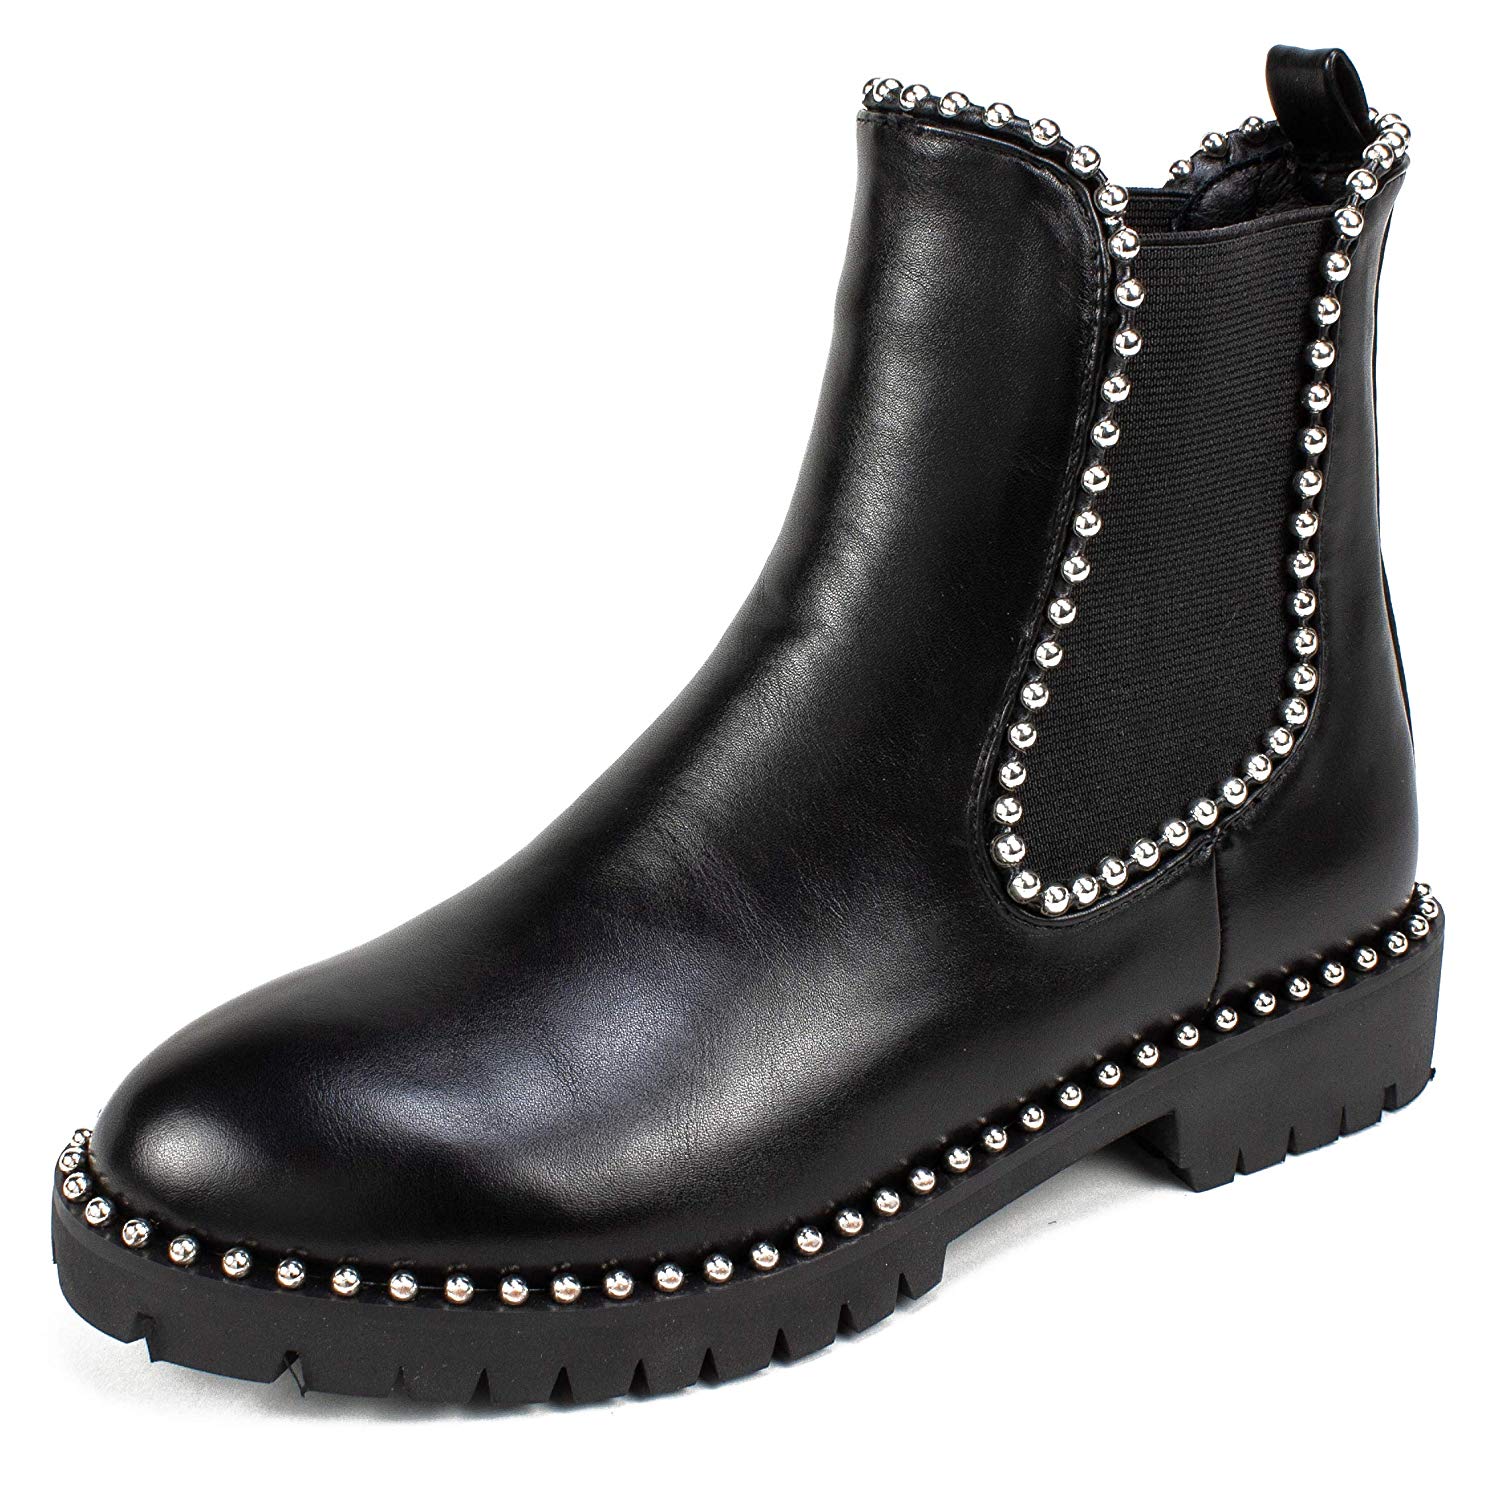 SEVEN DIALS Women's Shelley Chelsea Boot, Black, Size 8.5 JXa7 | eBay